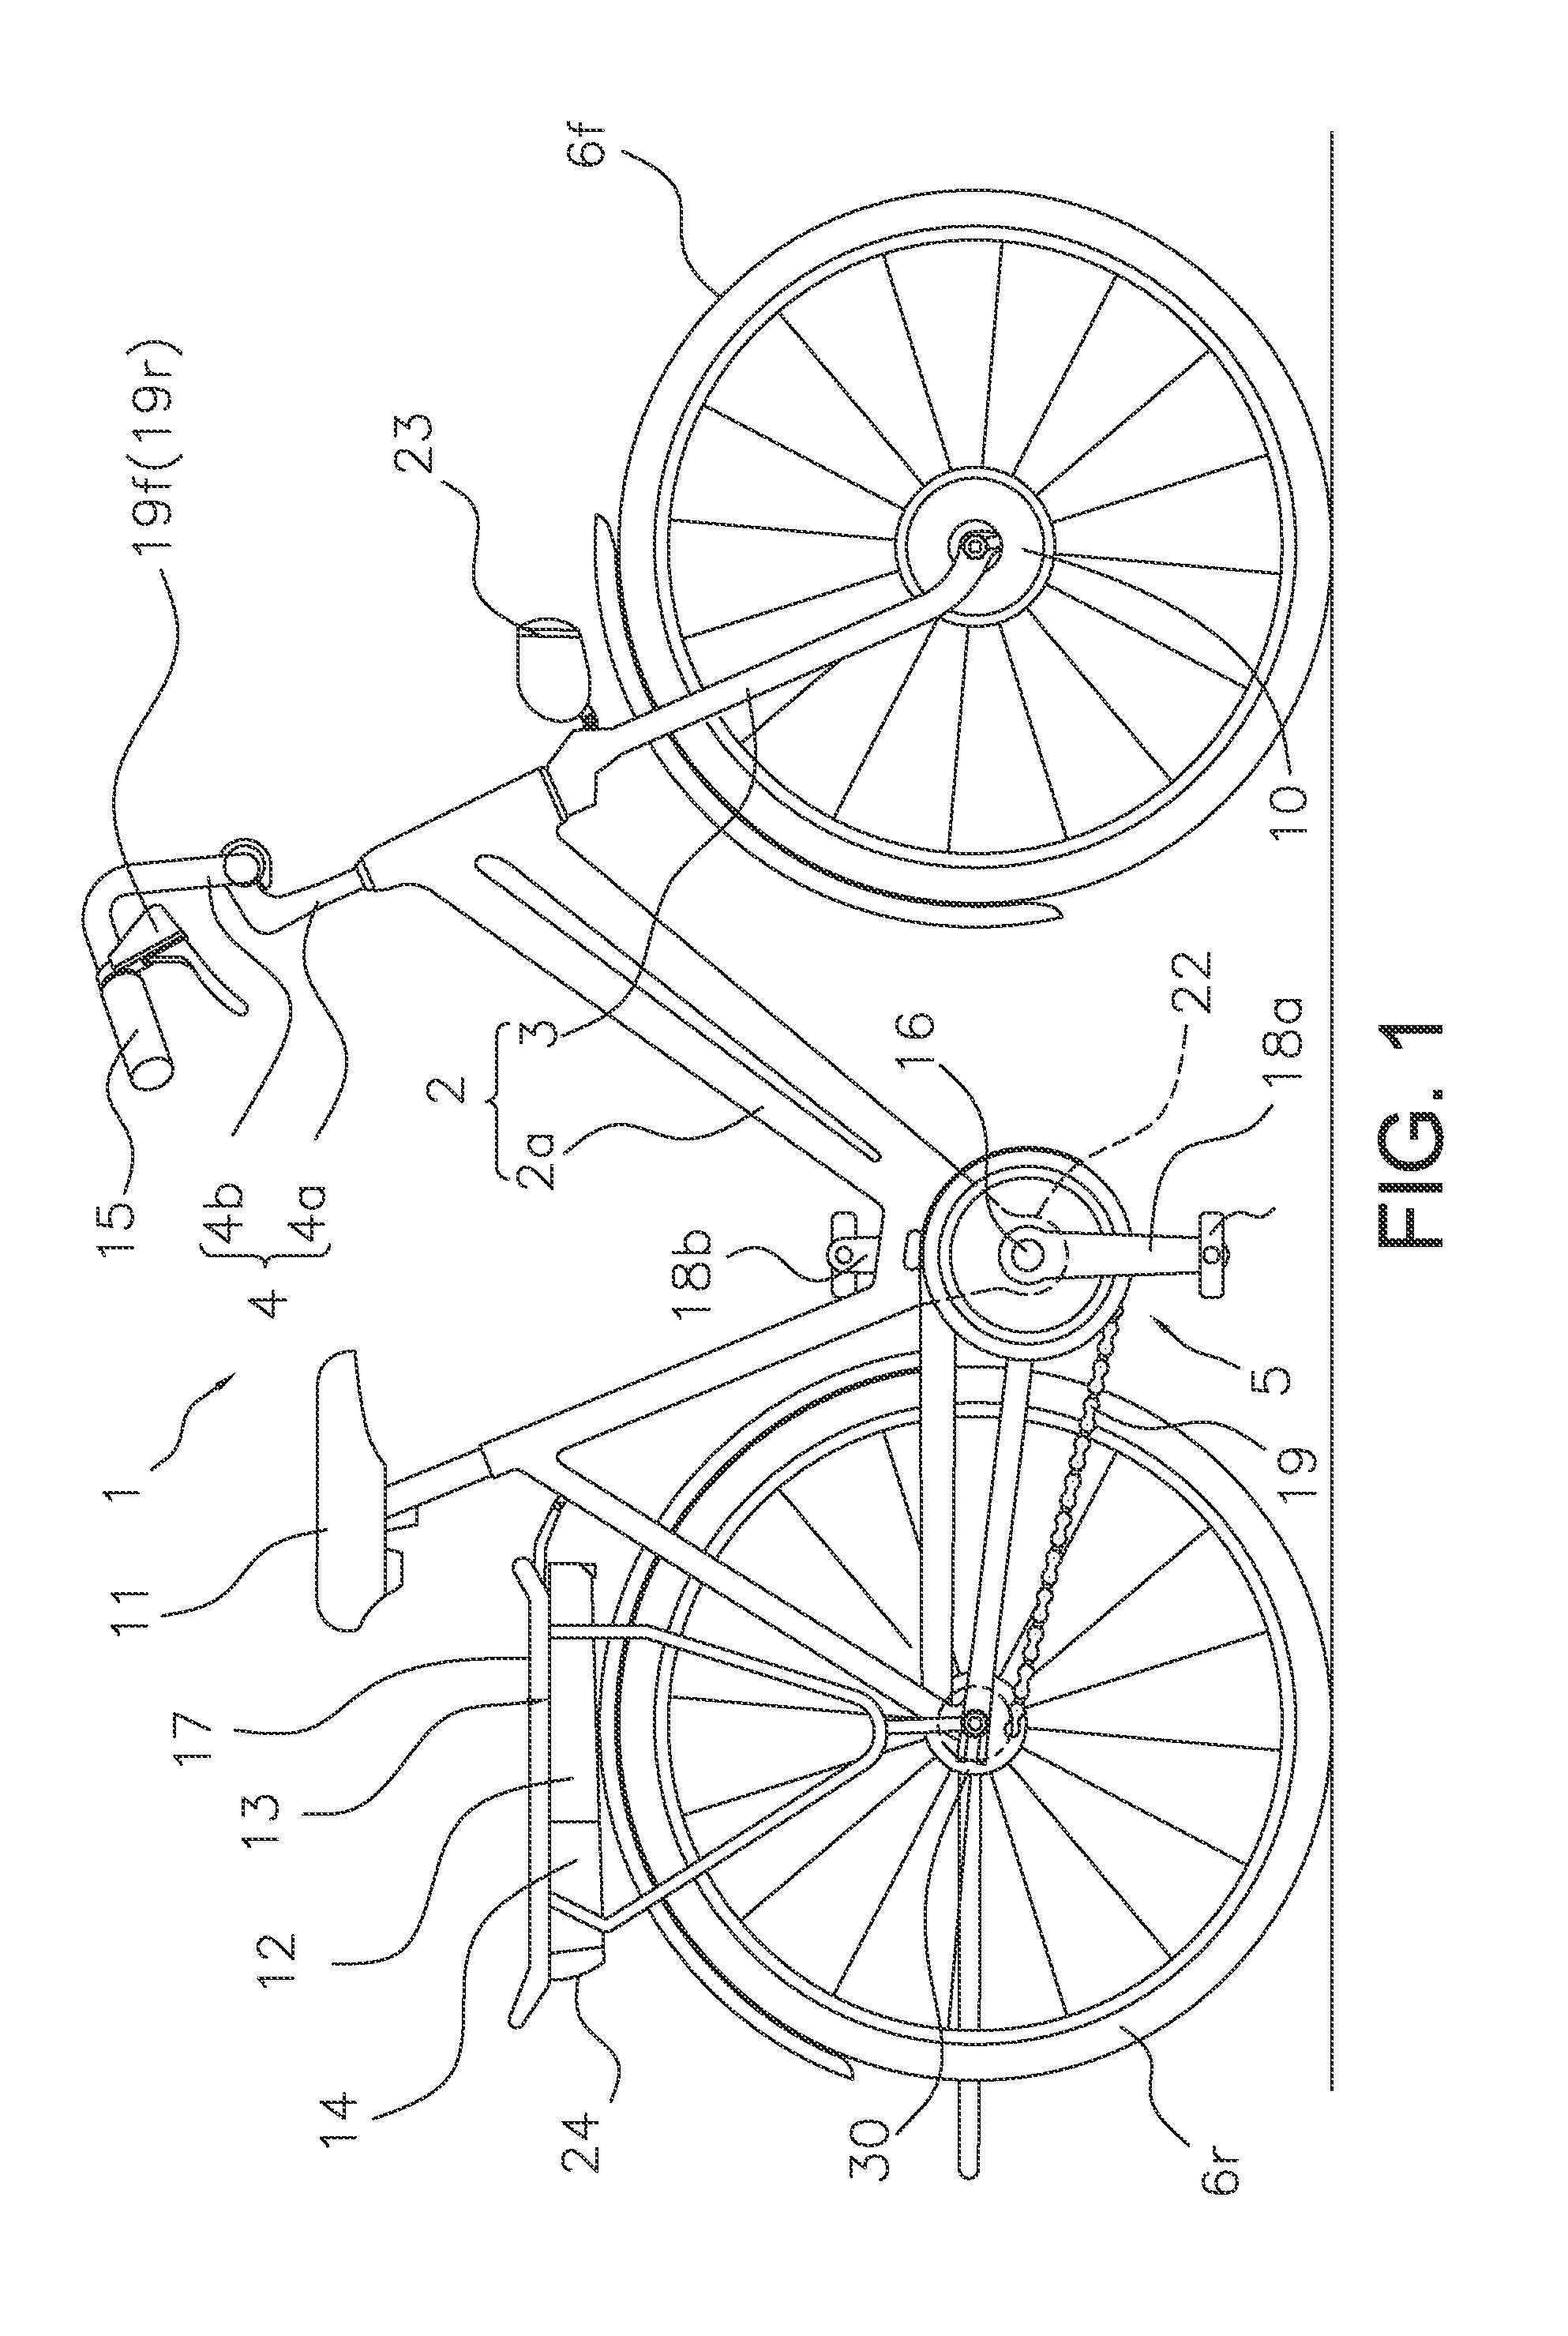 Bicycle motor control apparatus